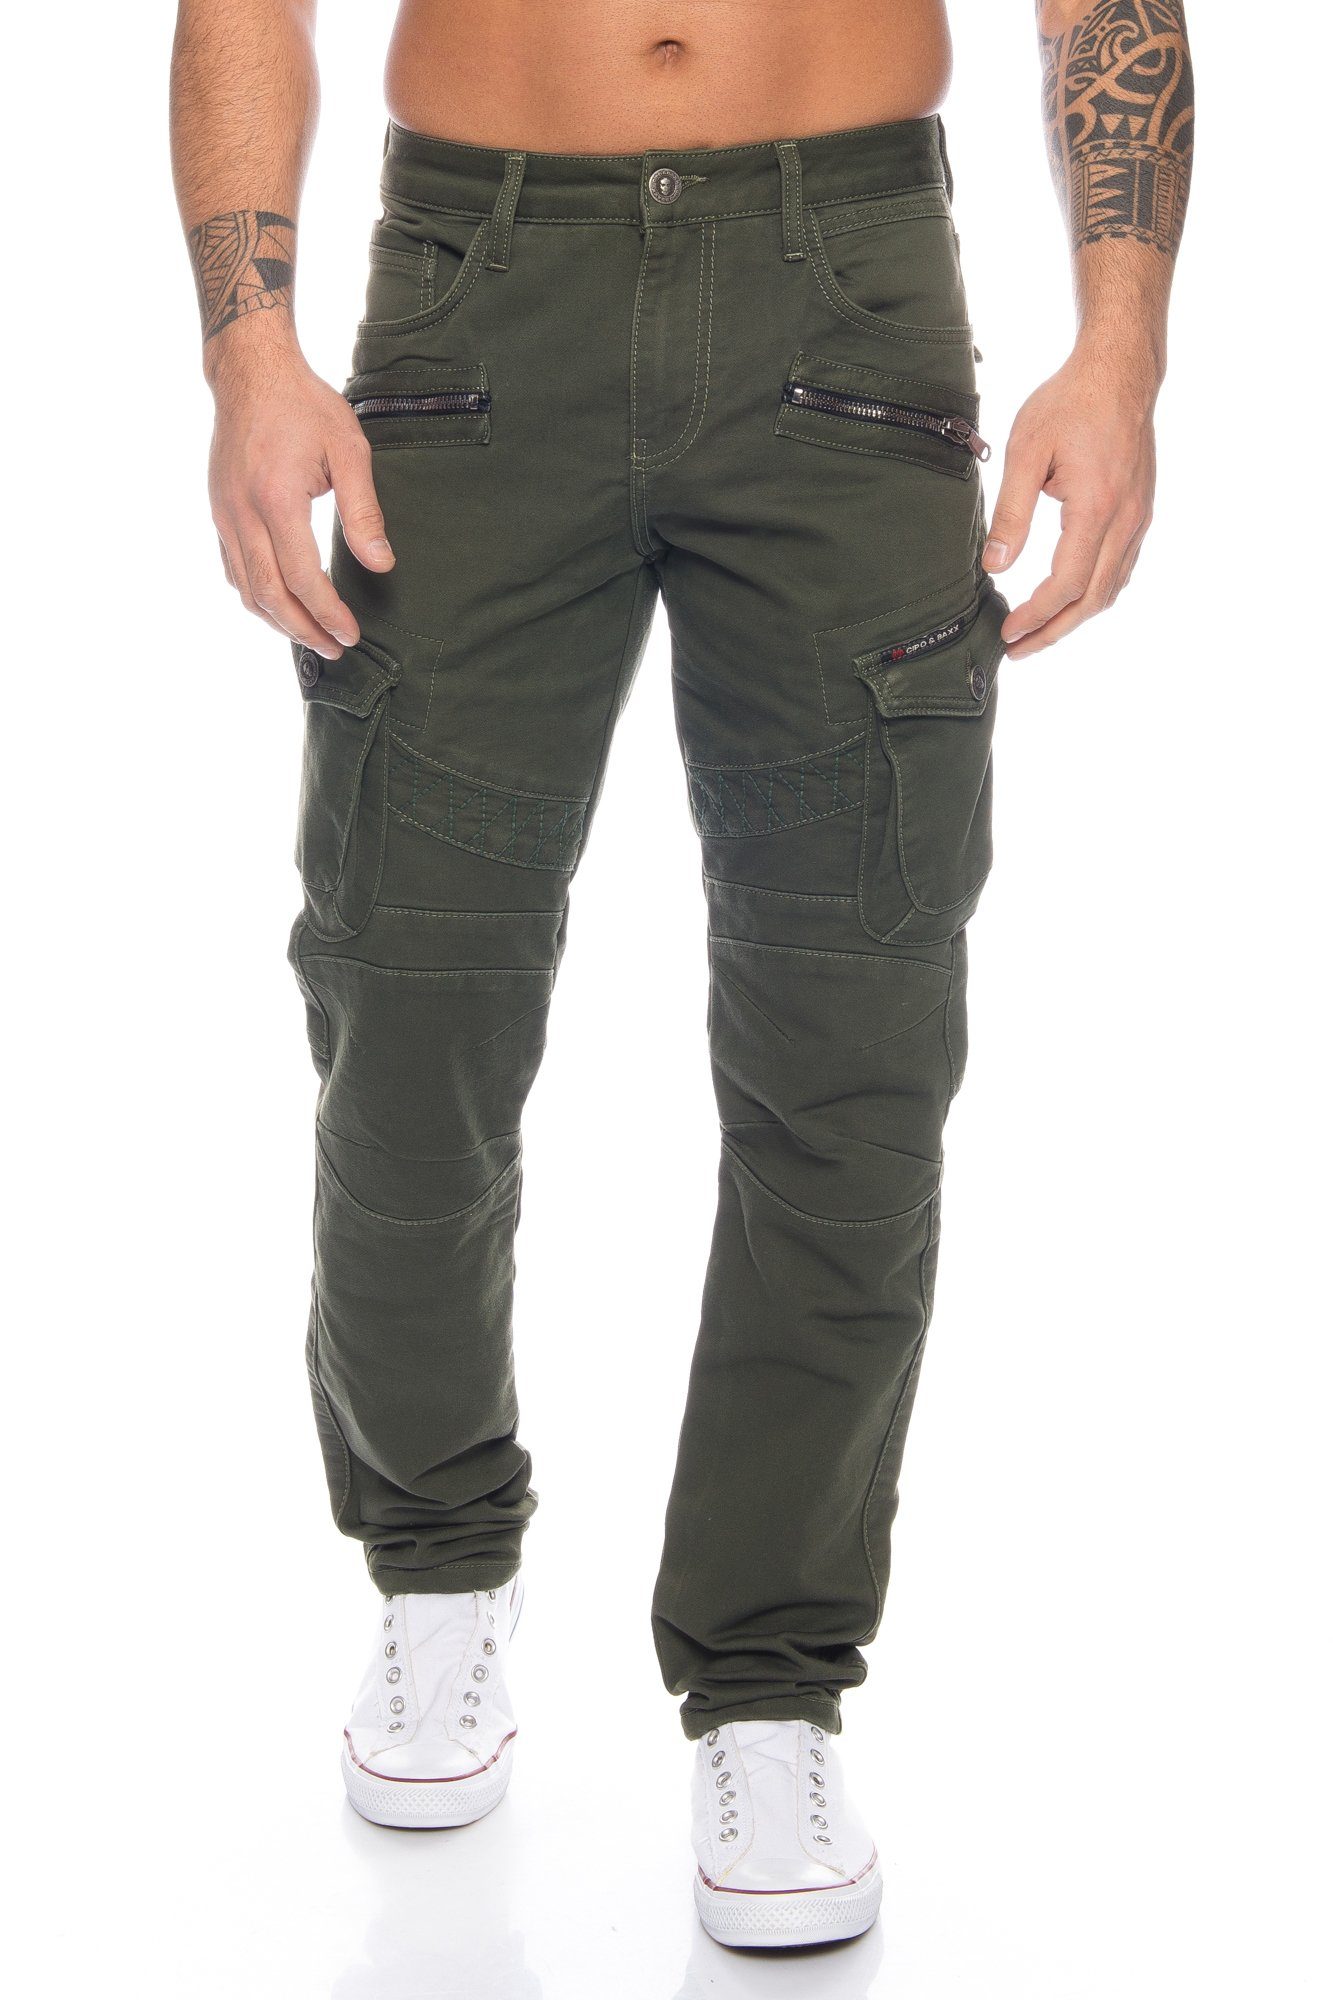 Cipo & Baxx Cargohose Herren Cargo Jeans Hose im modernen Design Schicke Nahtverzierungen Khaki